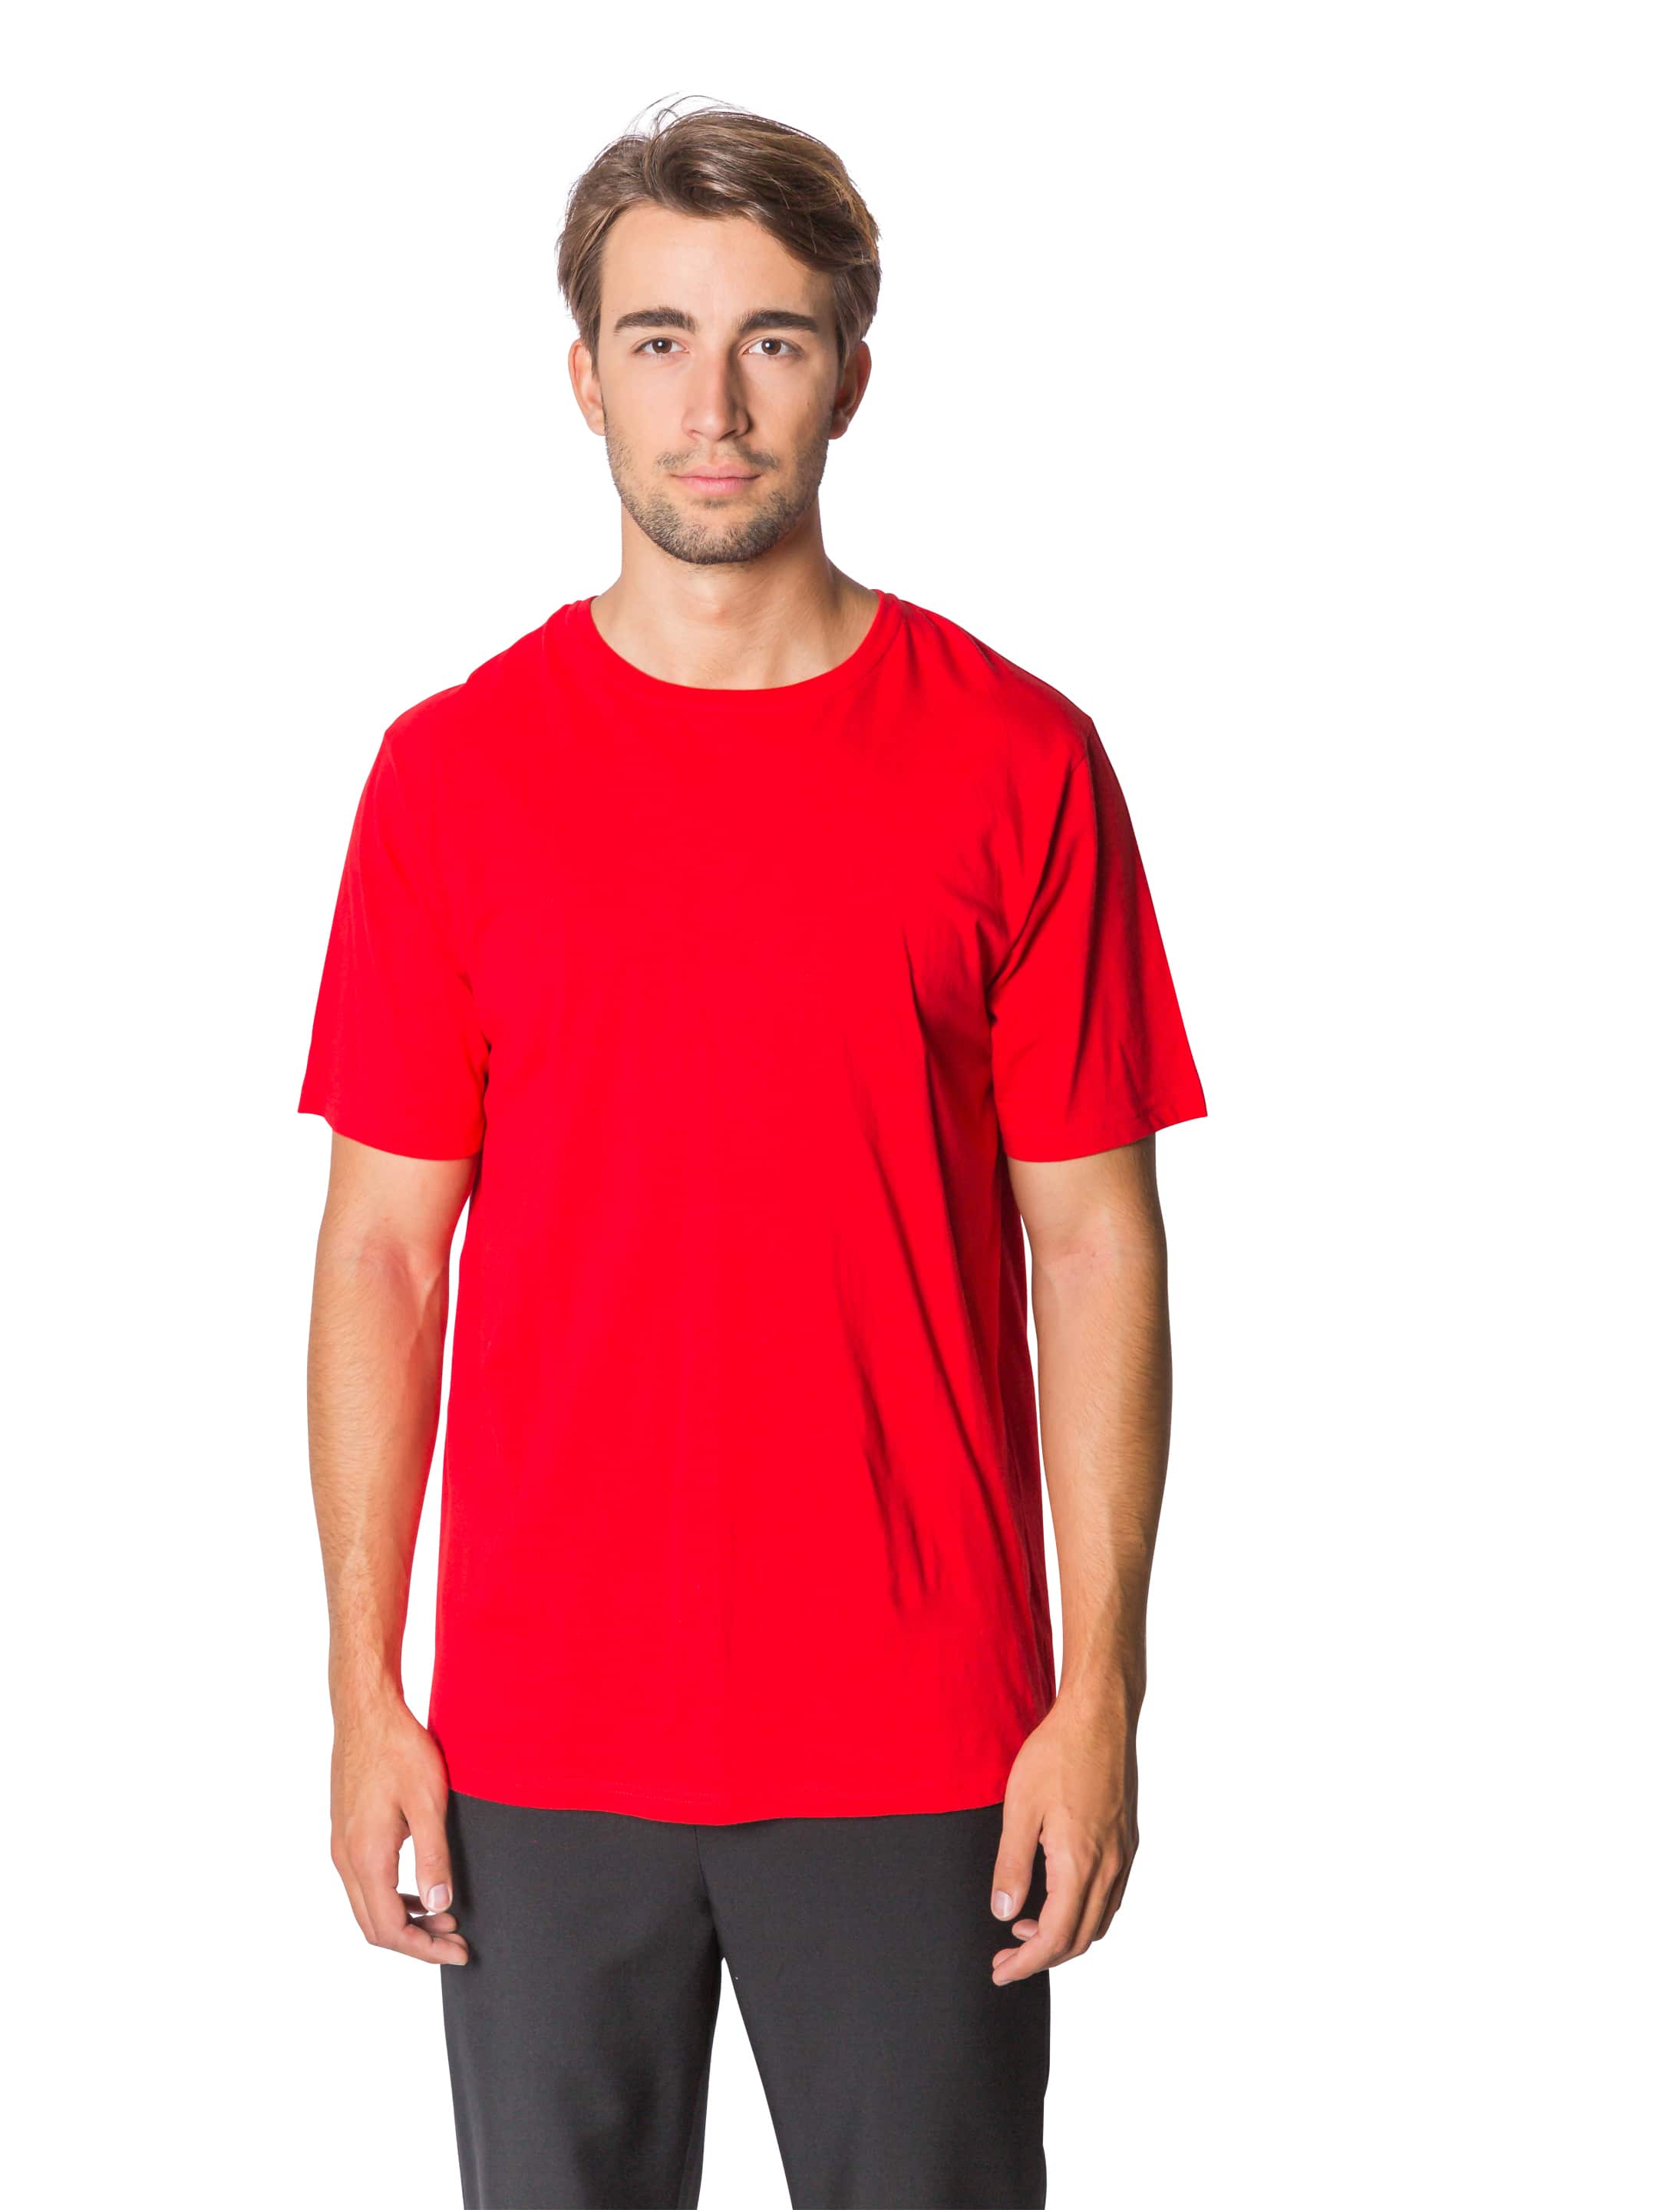 T-Shirt Herren rot L